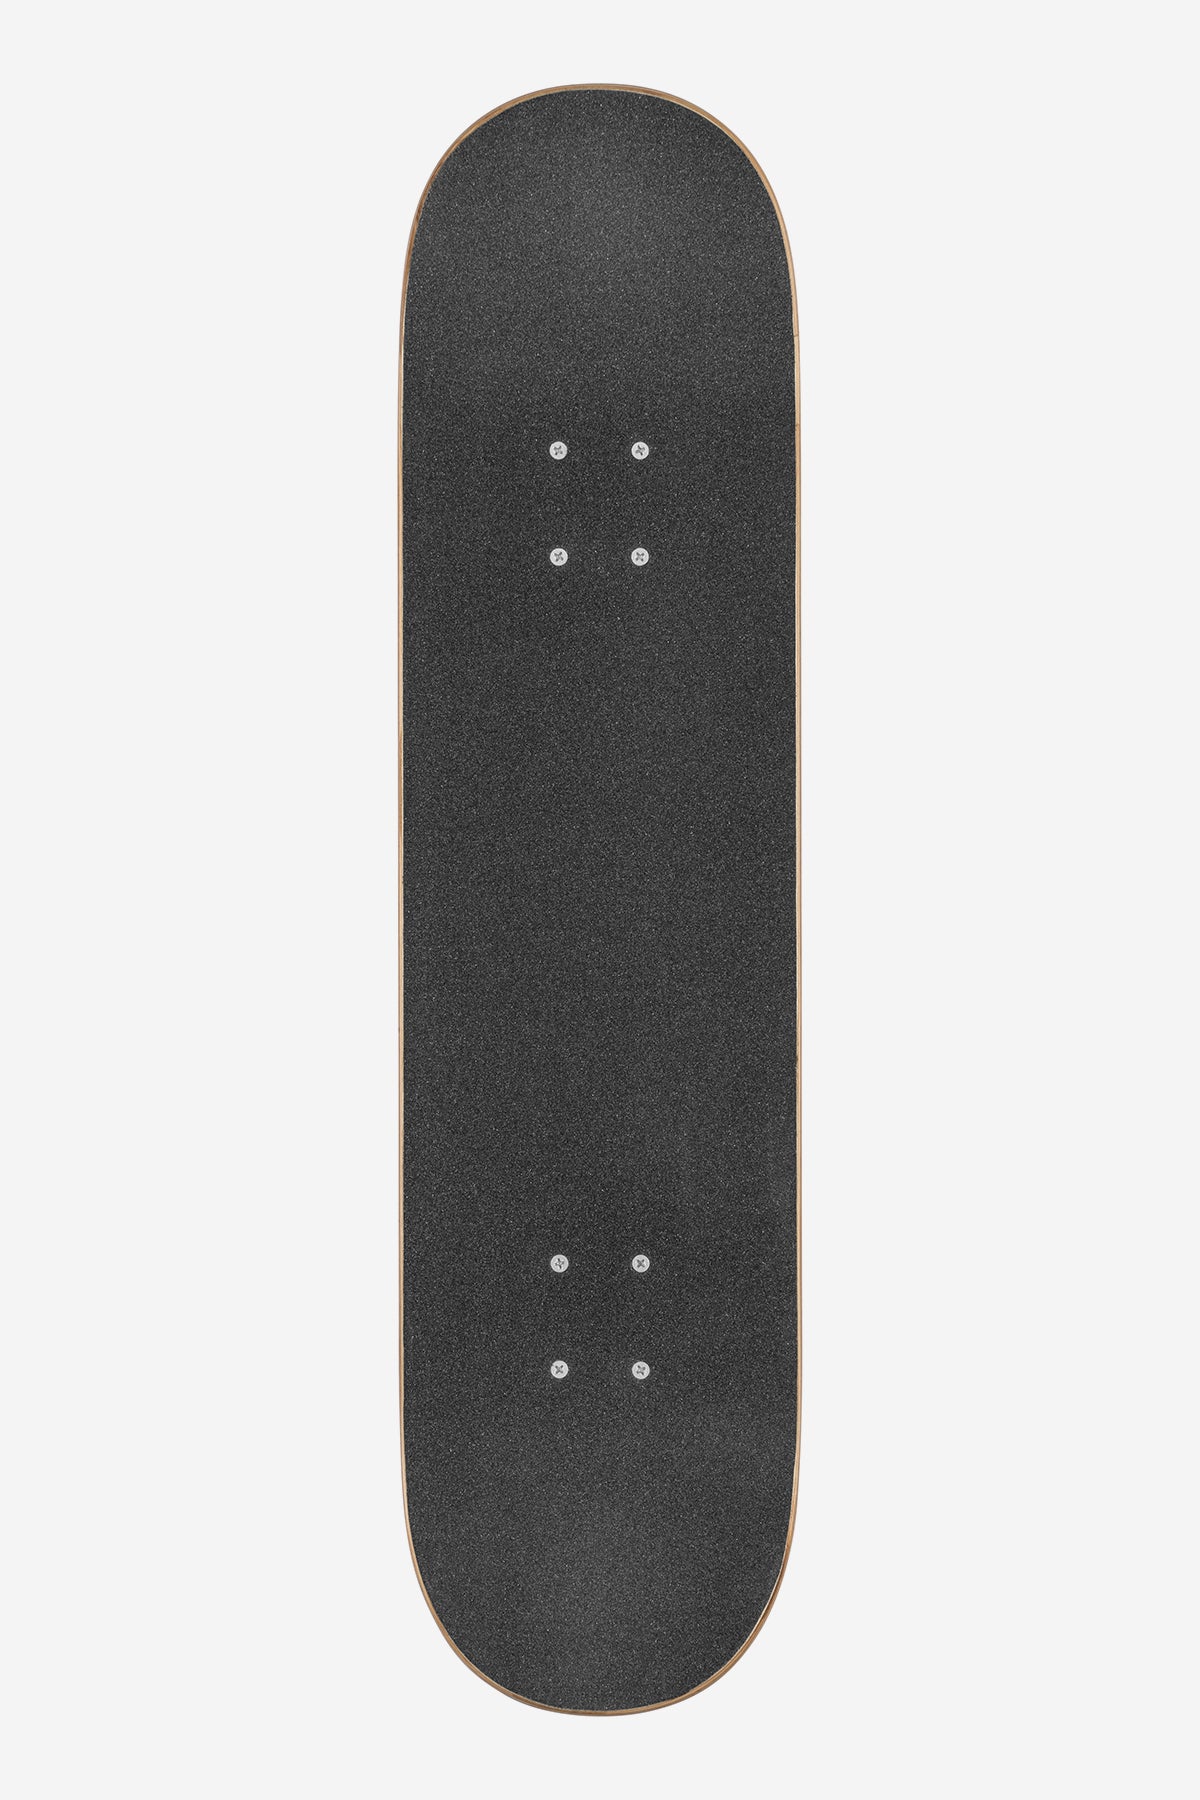 grip tape of G0 Fubar 8.0" Complete - White/Black